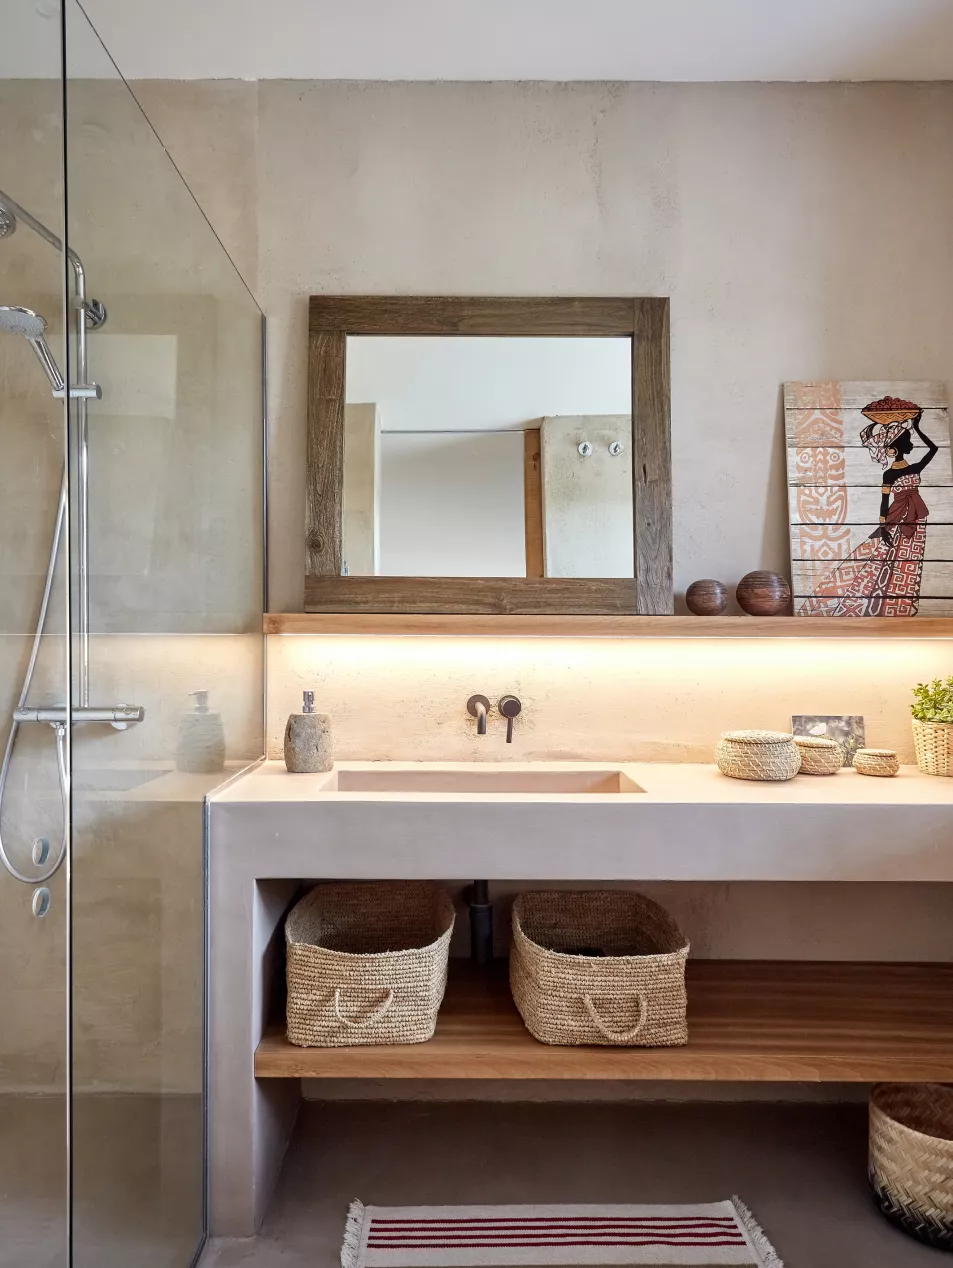 Bathroom vanity unit with to illustrate 'spa-throom' trend